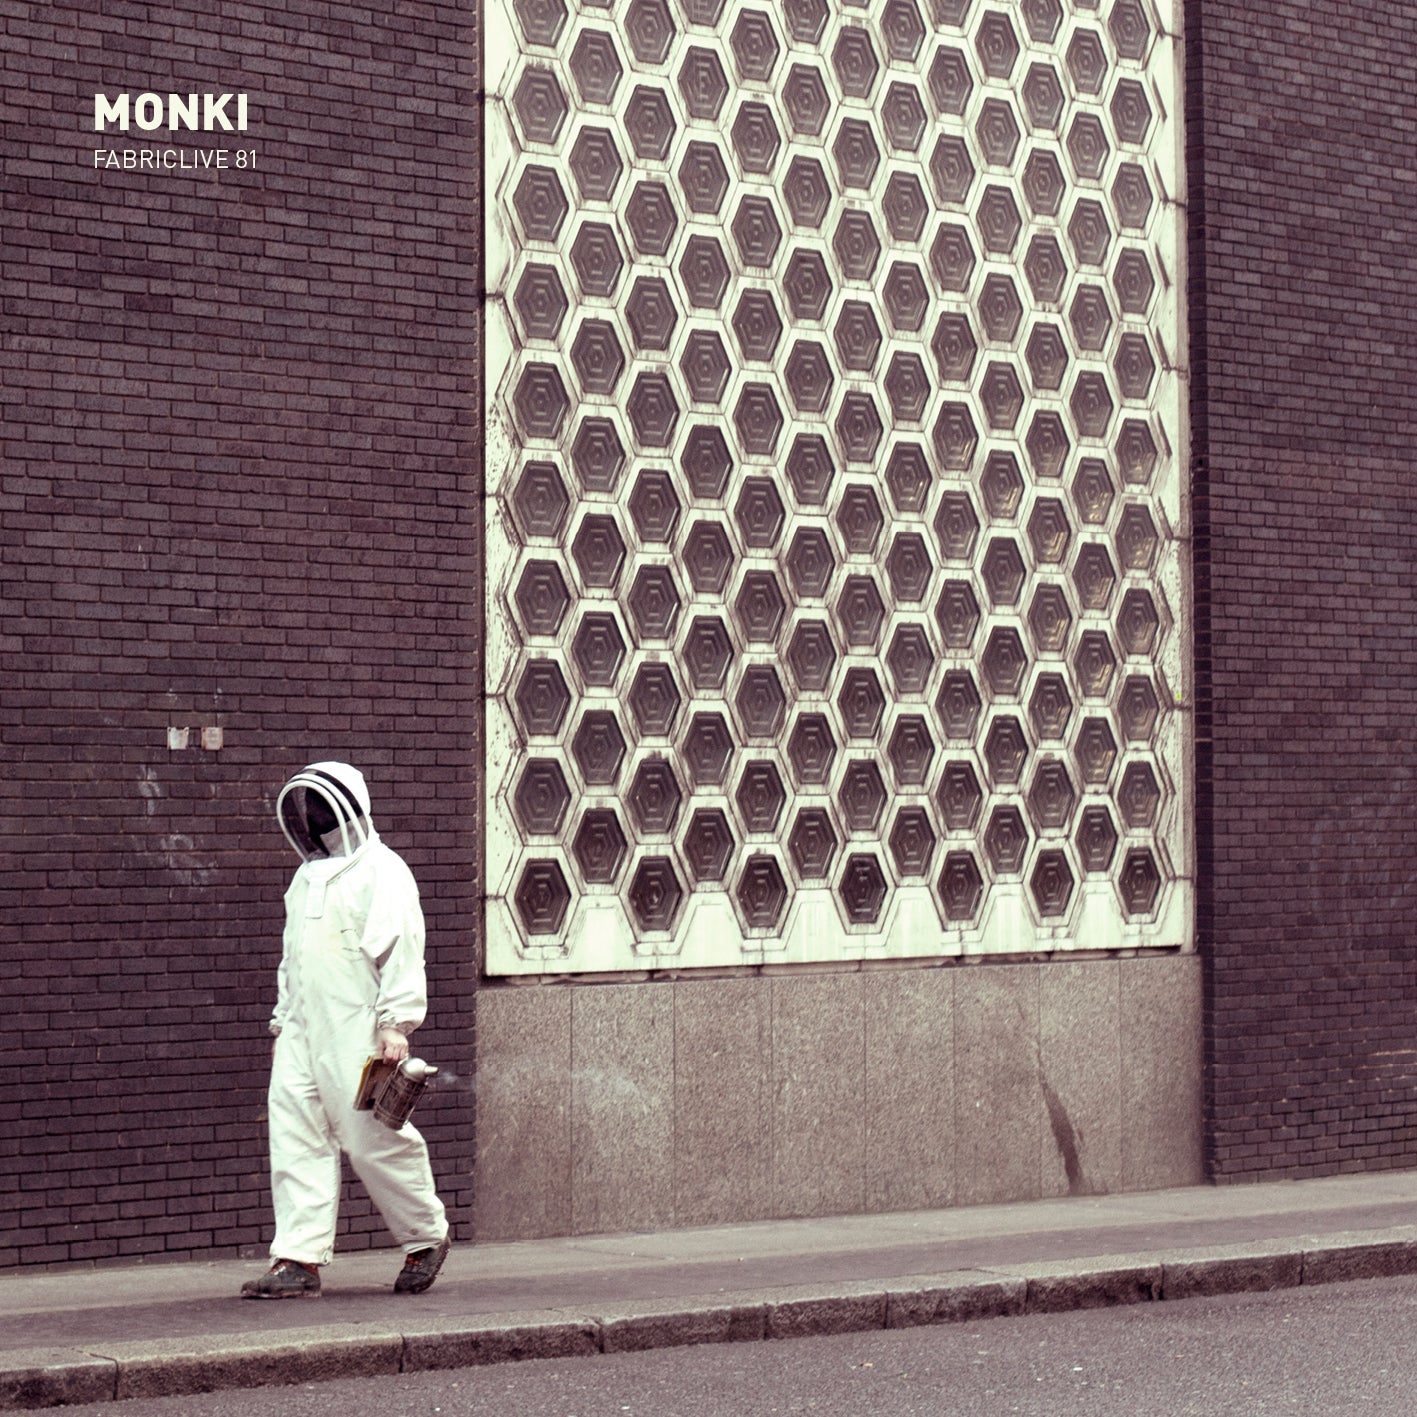 Monki - FABRICLIVE 81